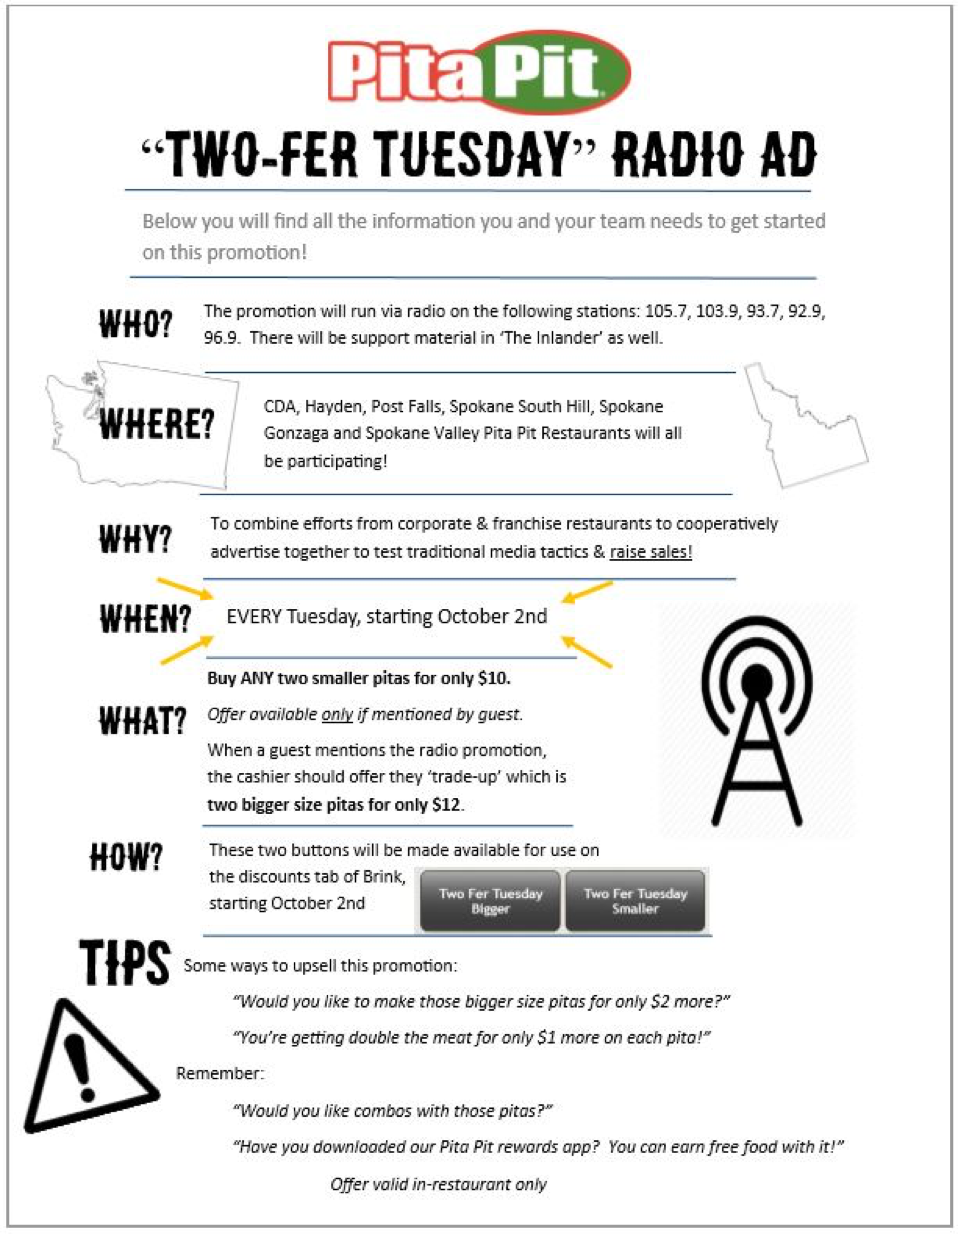 radio ad